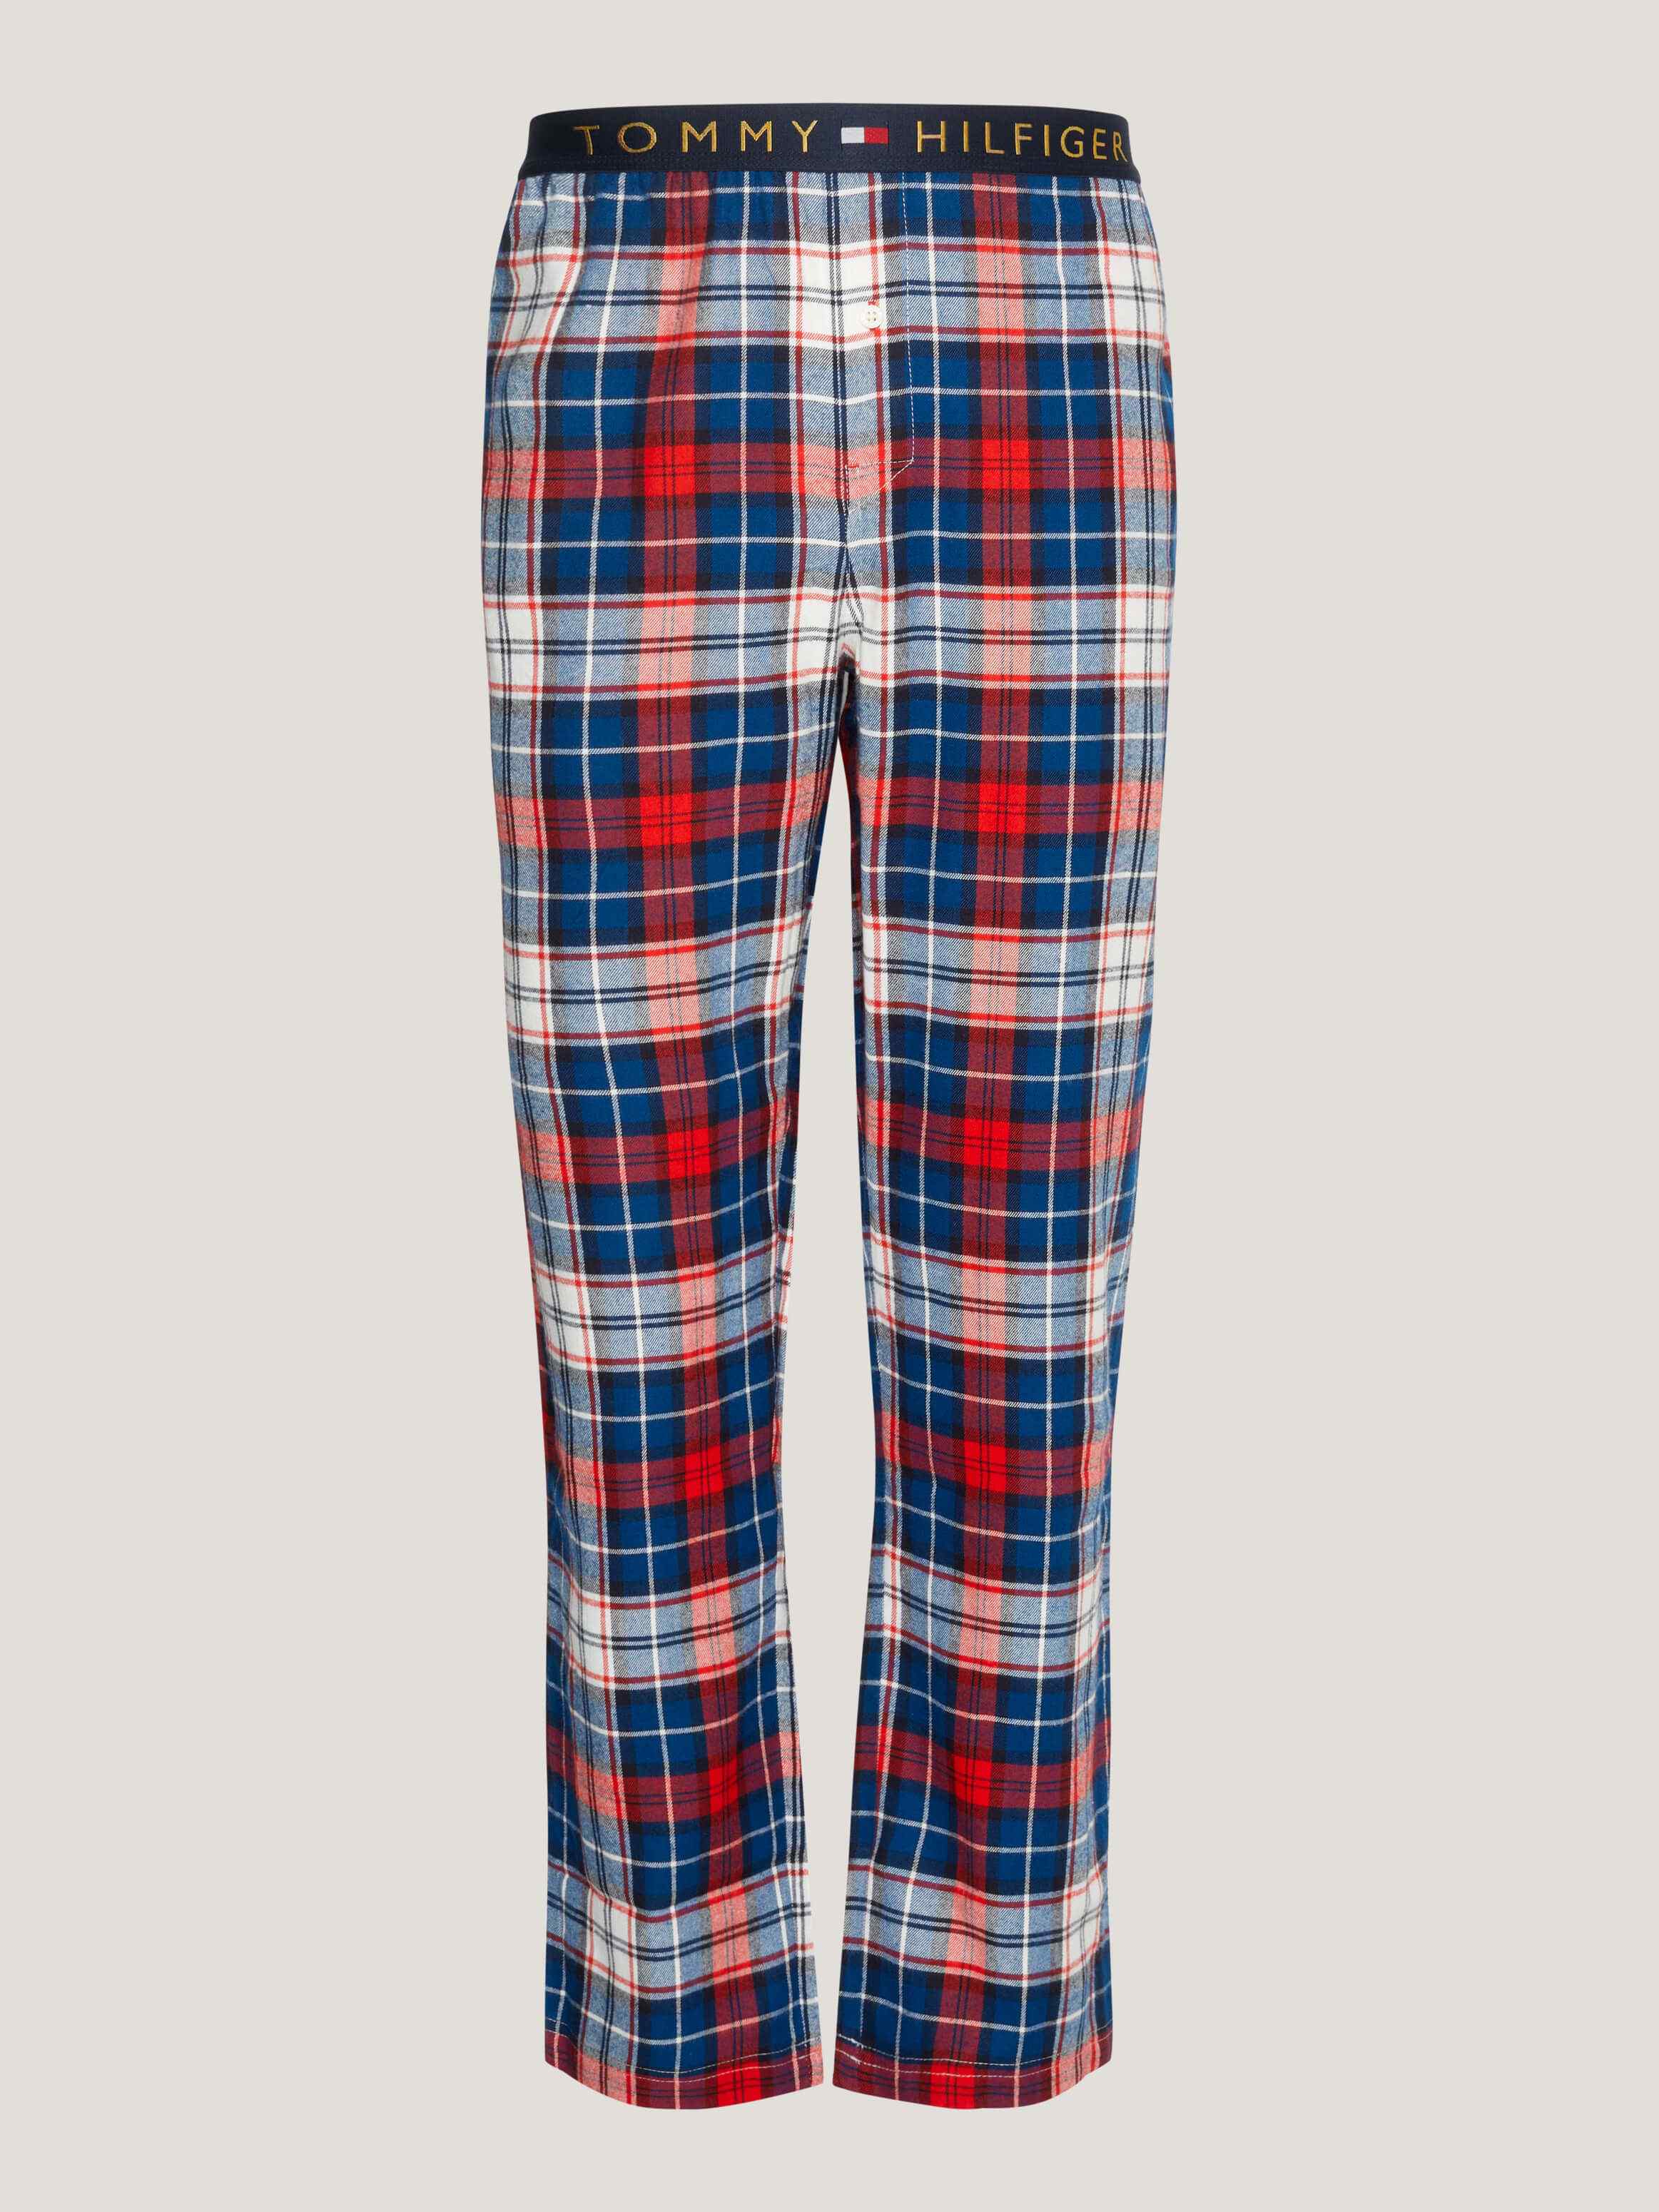 Pantalón de pijama TH Original franela hombre Tommy Hilfiger